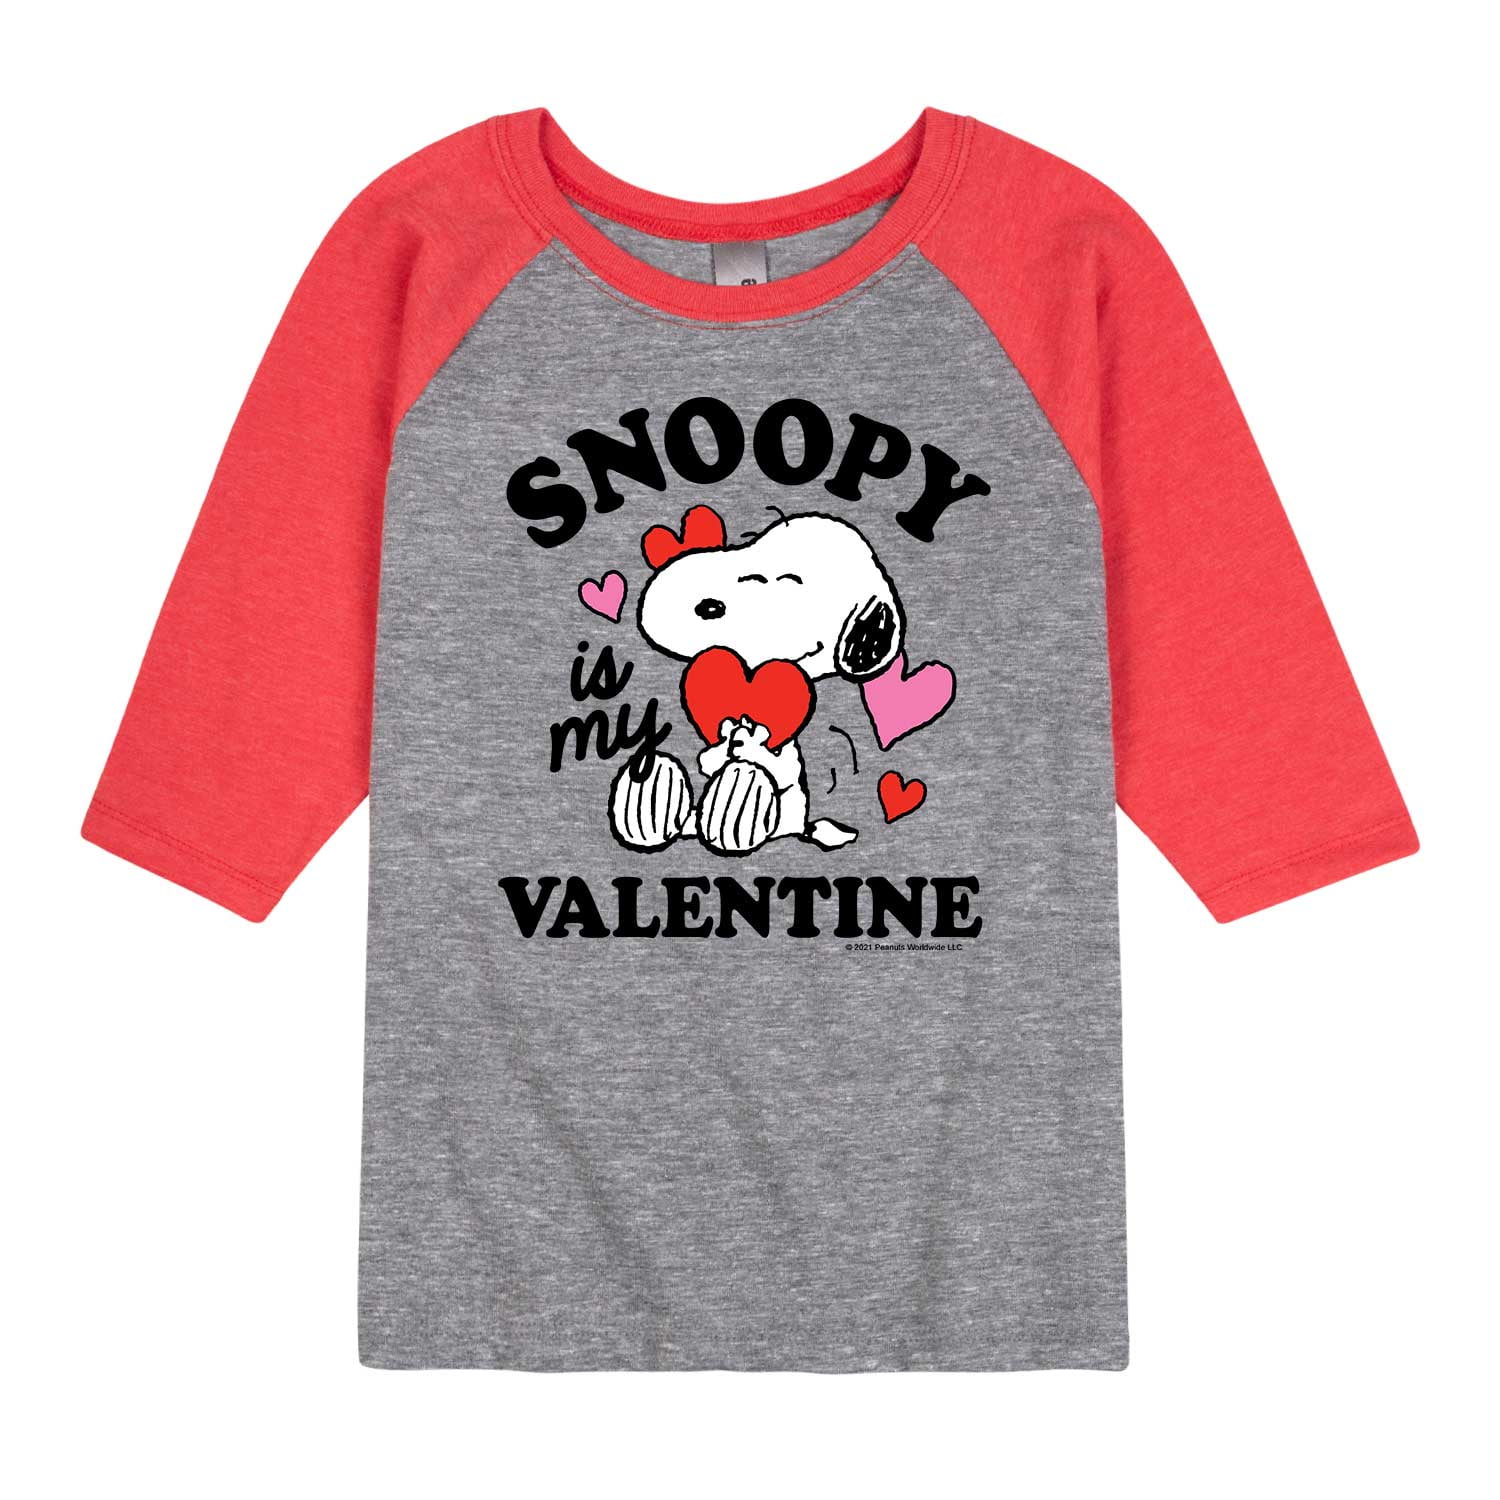 Peanuts - Snoopy My Valentine - Toddler And Youth Raglan - Walmart.com